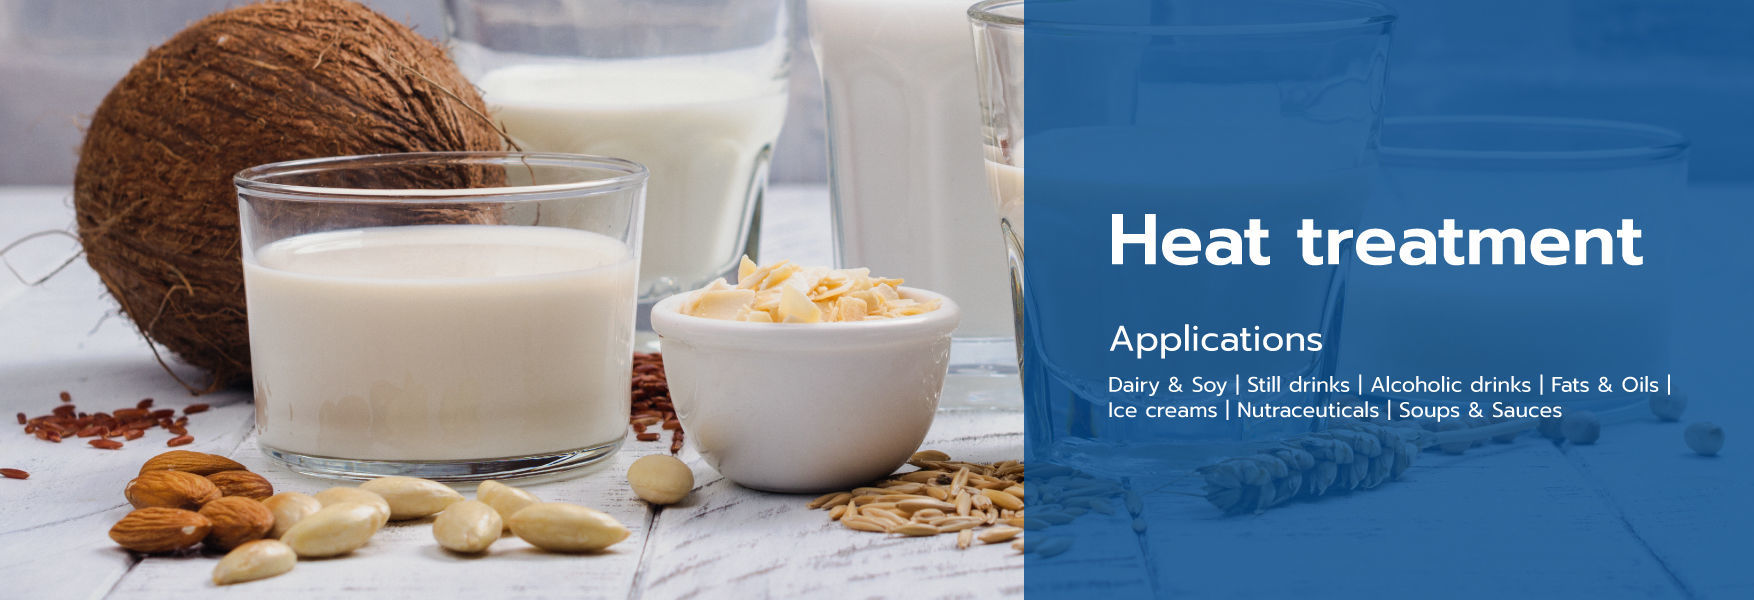 Heat treatment Applications  Dairy & Soy | Still drinks | Alcoholic drinks | Fats & Oils | Ice cream